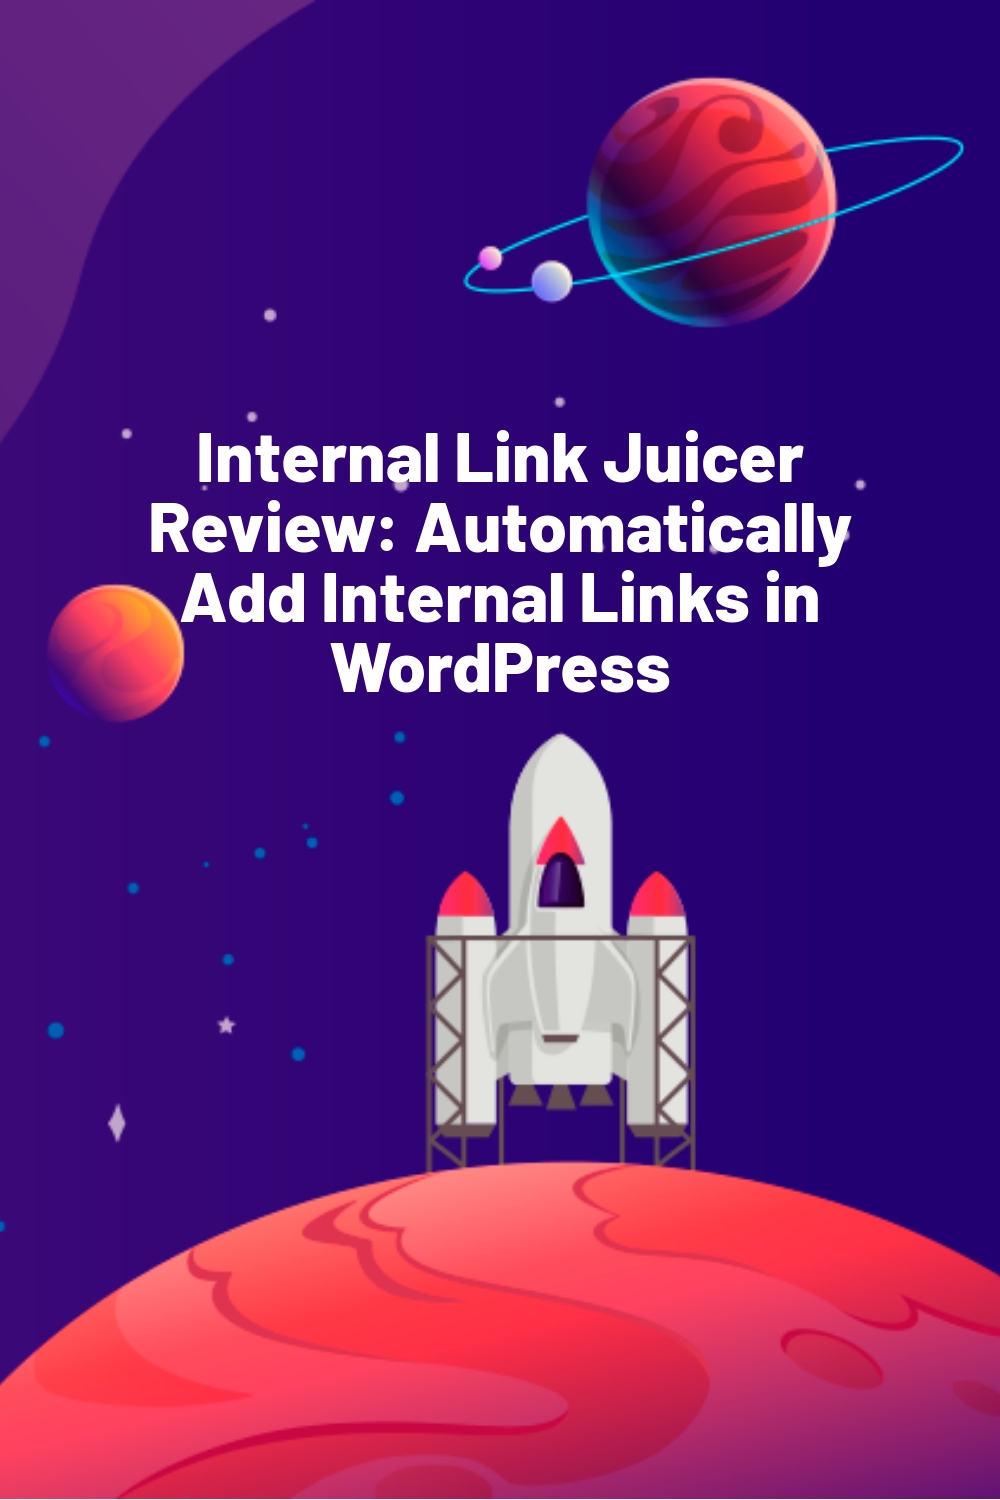 Internal Link Juicer Review: Automatically Add Internal Links in WordPress